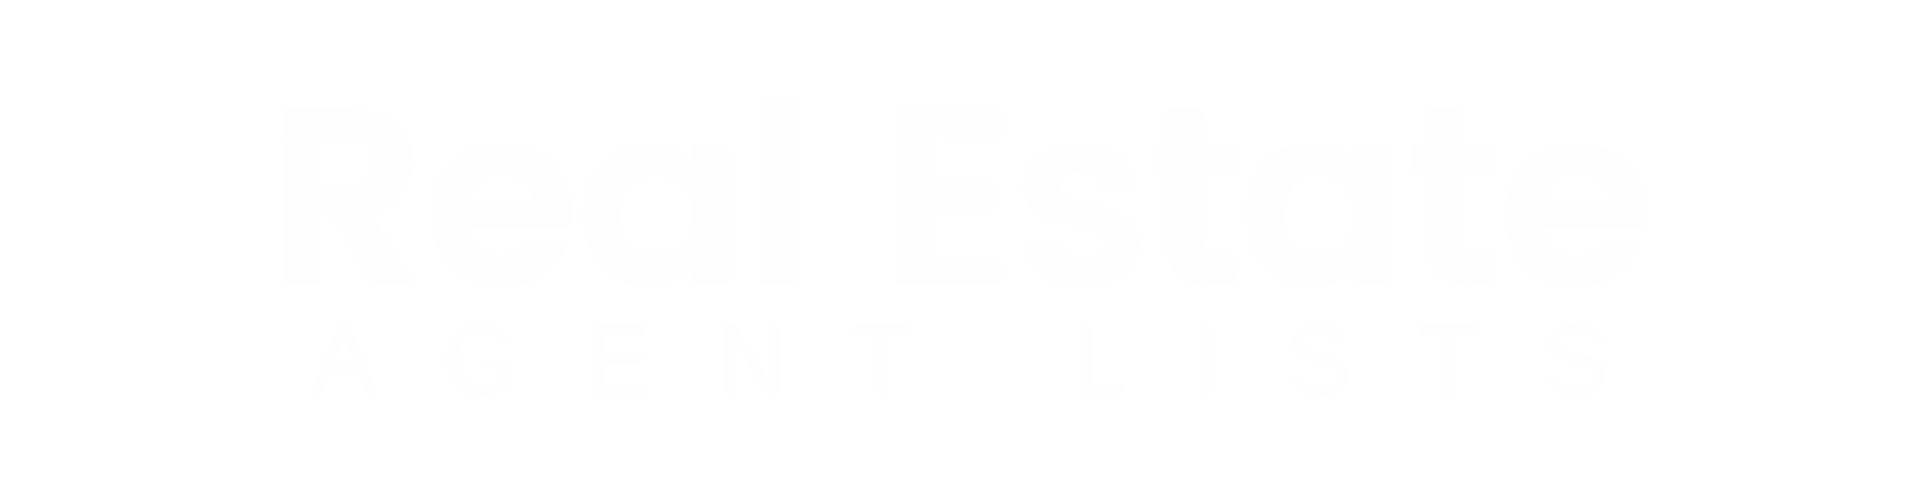 real estate agent list logo